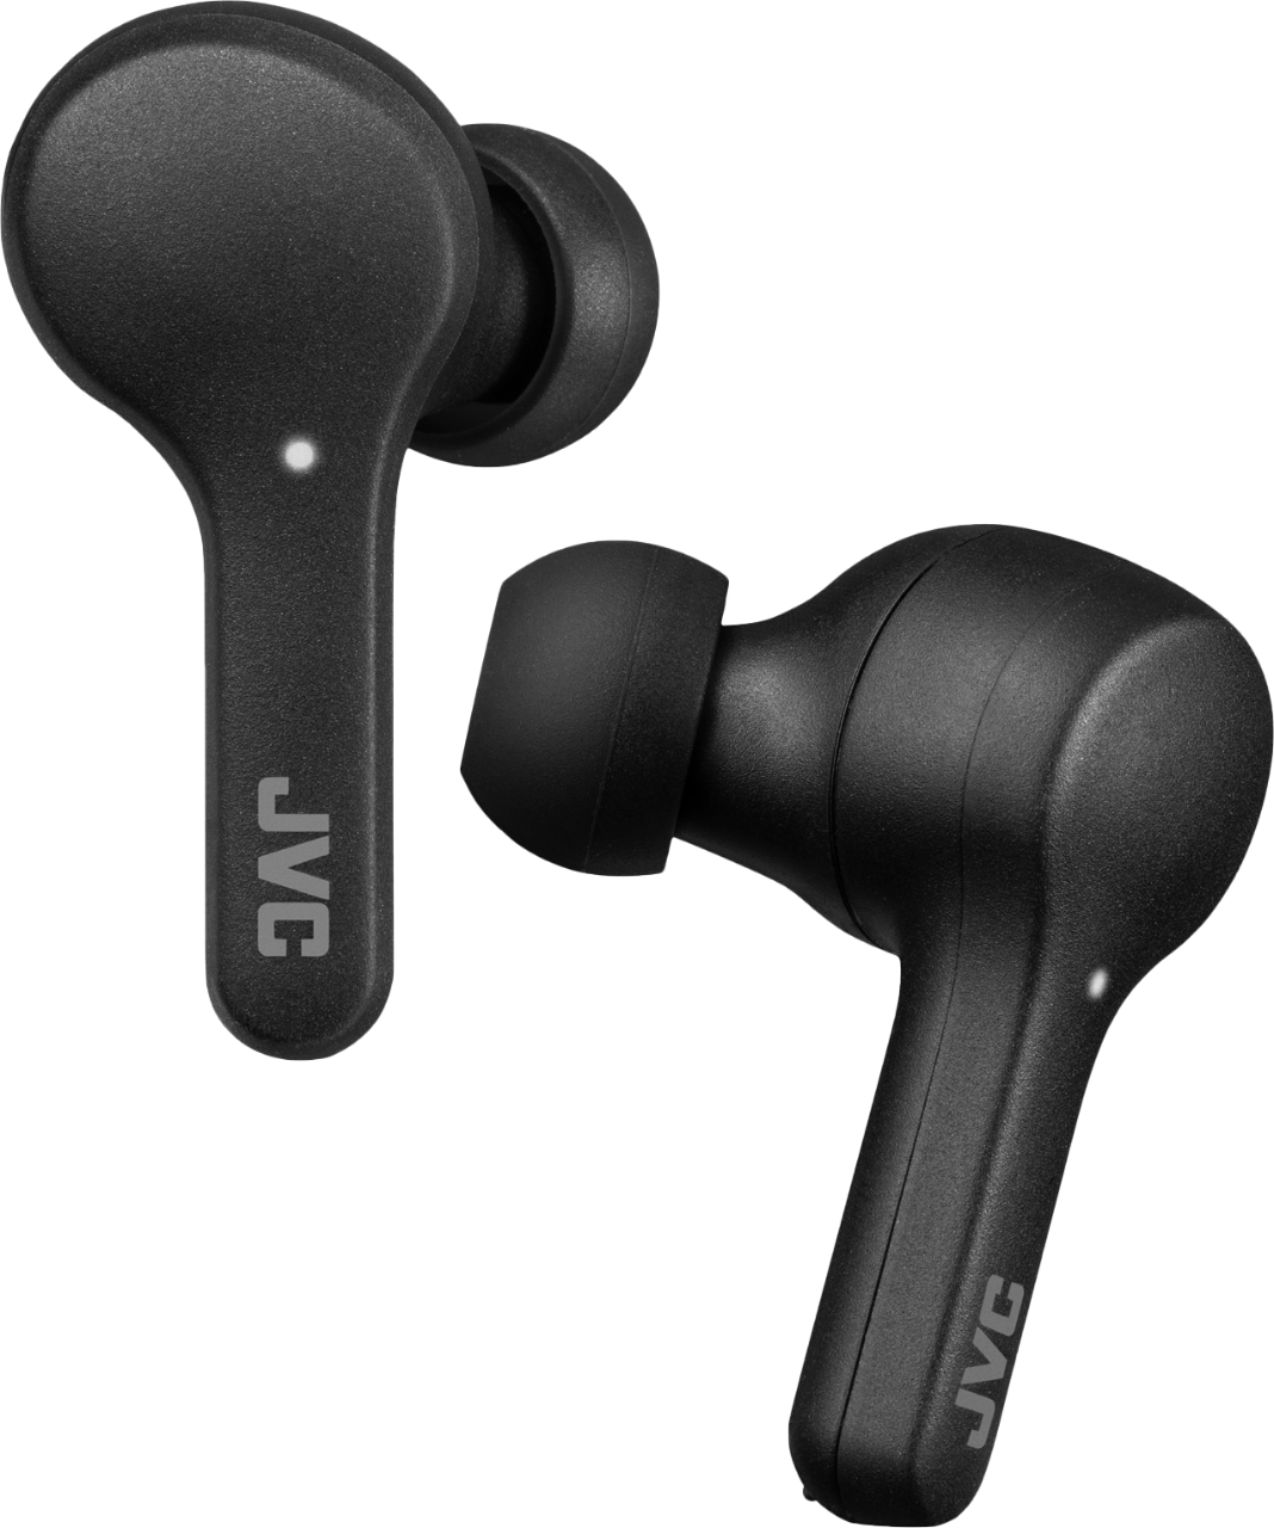 Angle View: JVC - Gumy True Wireless Headphones - Black